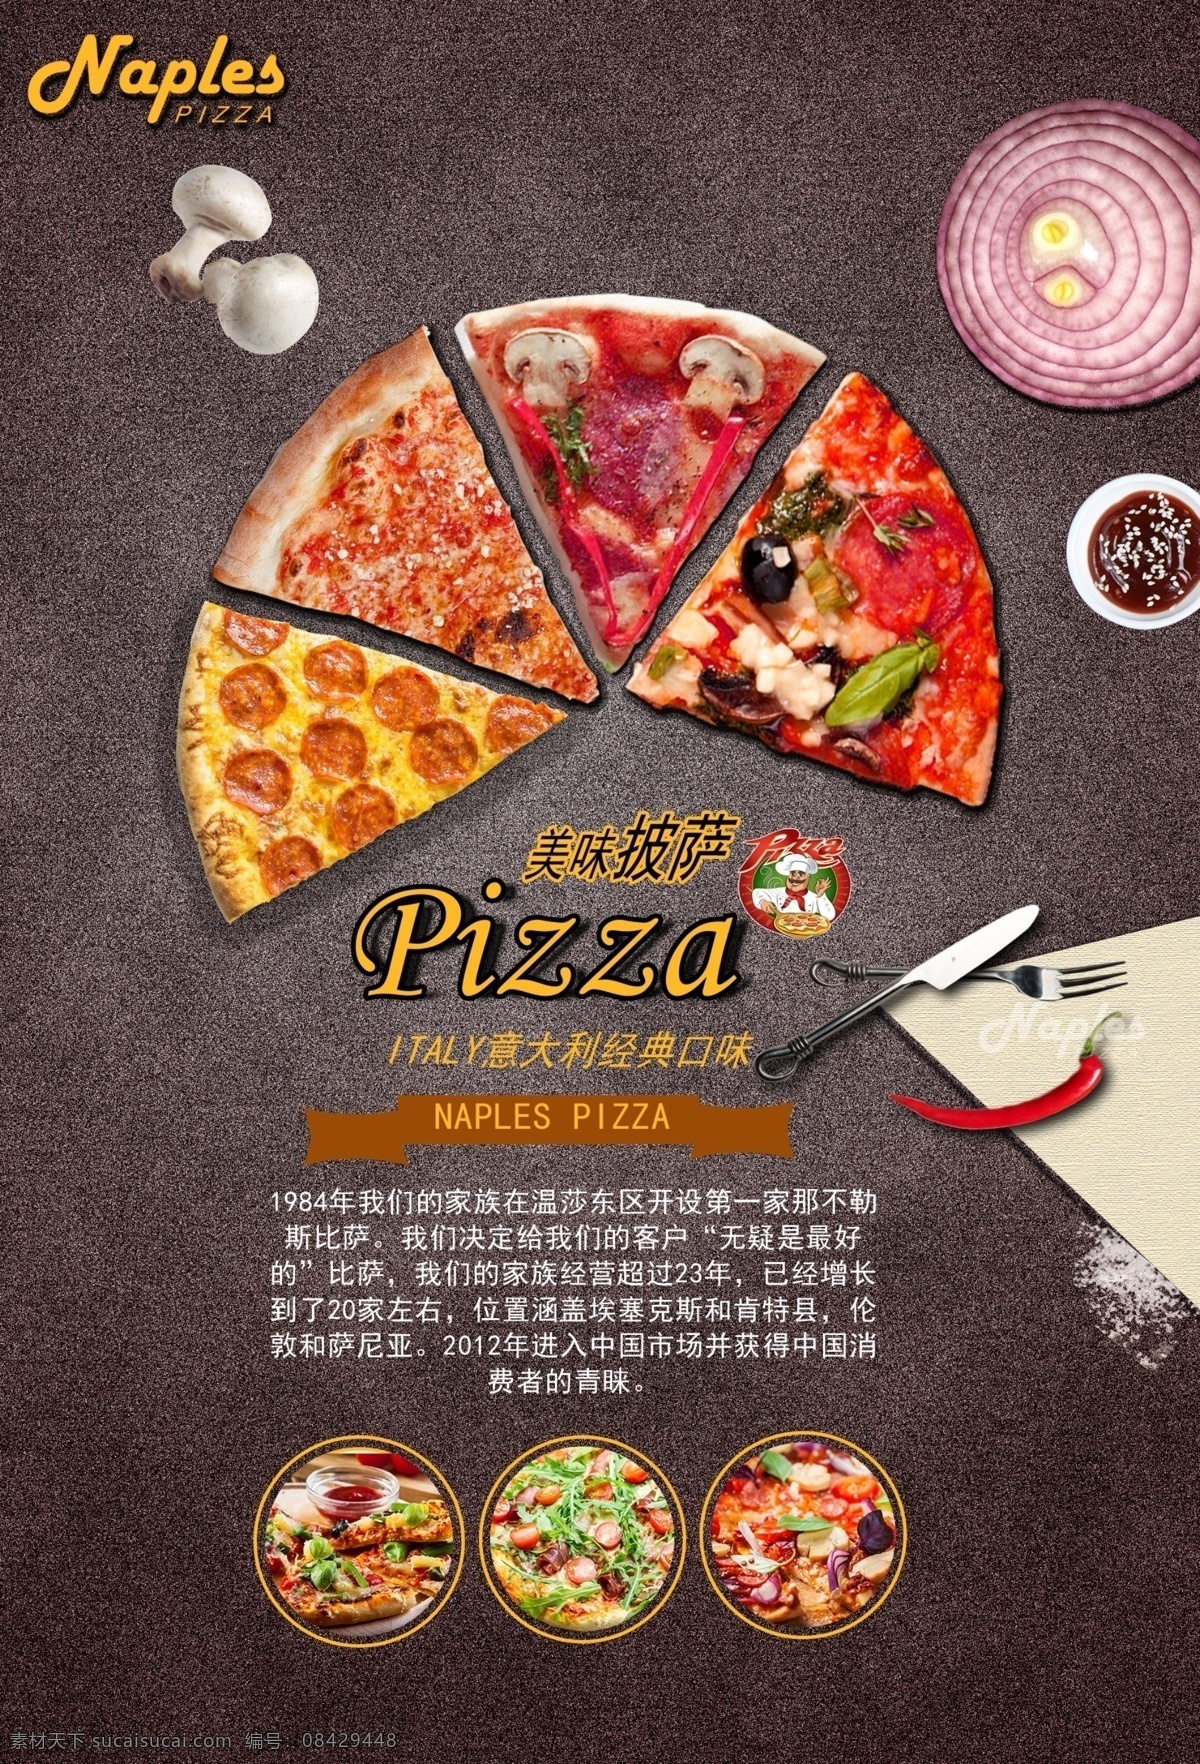 pizza 活动 海报 披萨 比萨 意大利披萨 美味 中国披萨 披萨做法 美味披萨 美食 小吃 披萨海报 披萨展板 披萨文化 披萨促销 披萨西餐 披萨快餐 披萨加盟 披萨店 必胜店 比萨披萨 披萨包装 披萨美食 西式披萨 披萨厨师 披萨插画 广告 特色披萨 披萨店海报 宣传海报画册